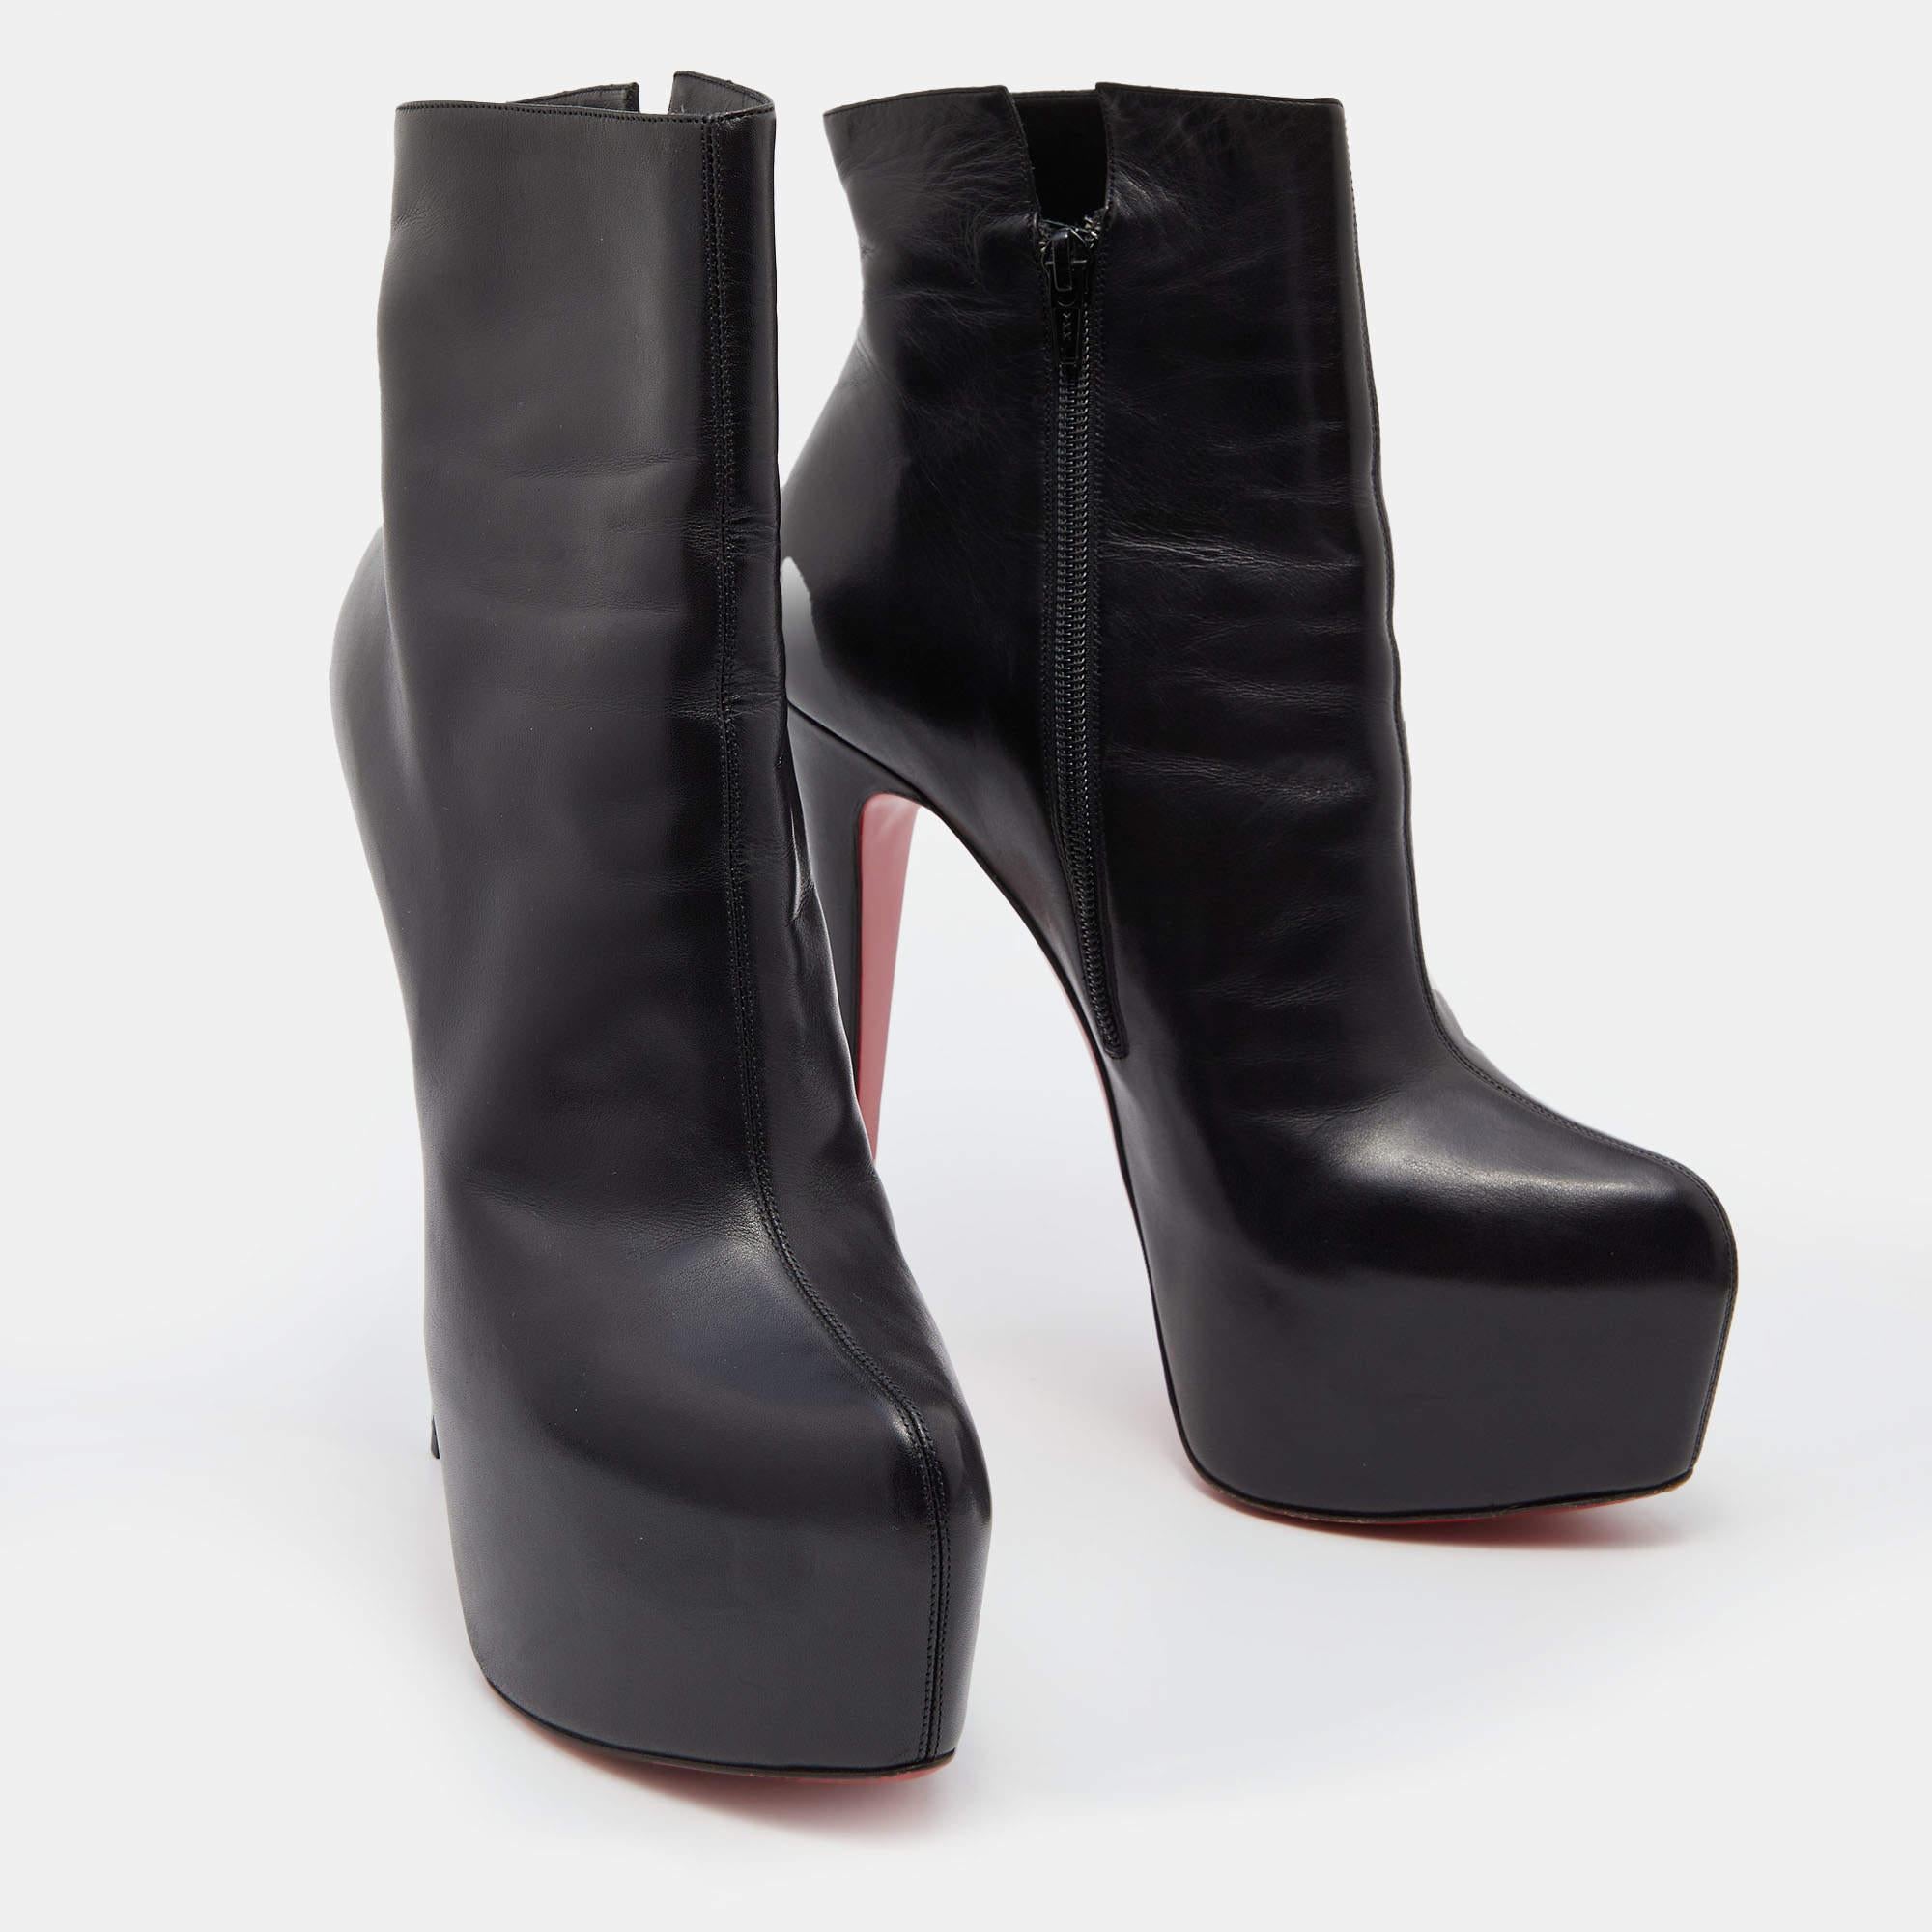 Christian Louboutin Black Leather Platform Ankle Length Boots Size 41 1